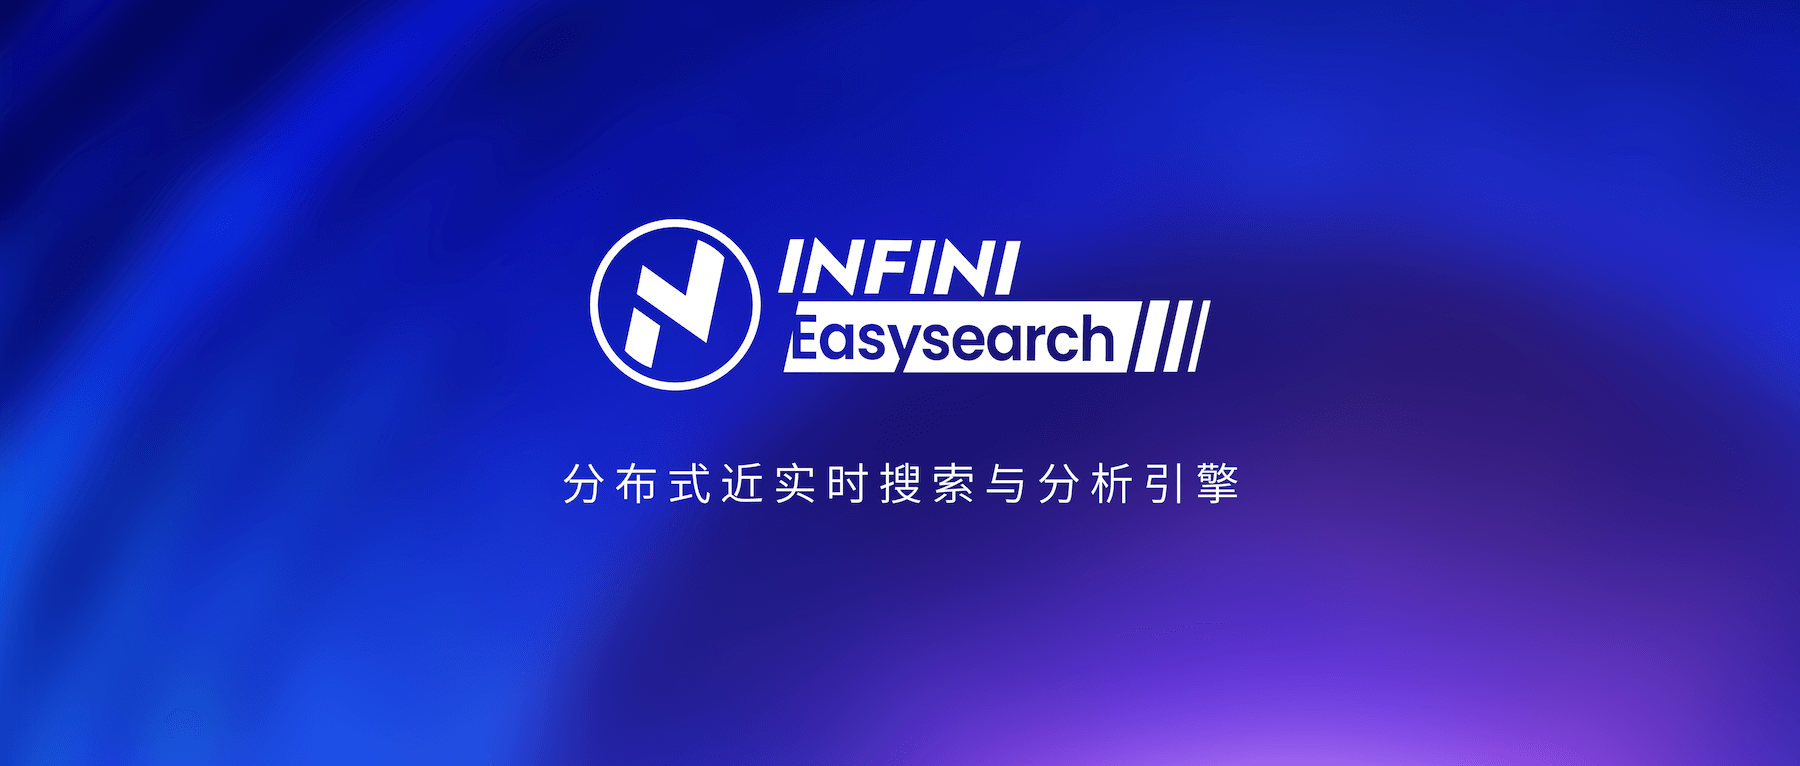 极限科技旗下软件产品 INFINI Easysearch 通过统信 UOS 认证